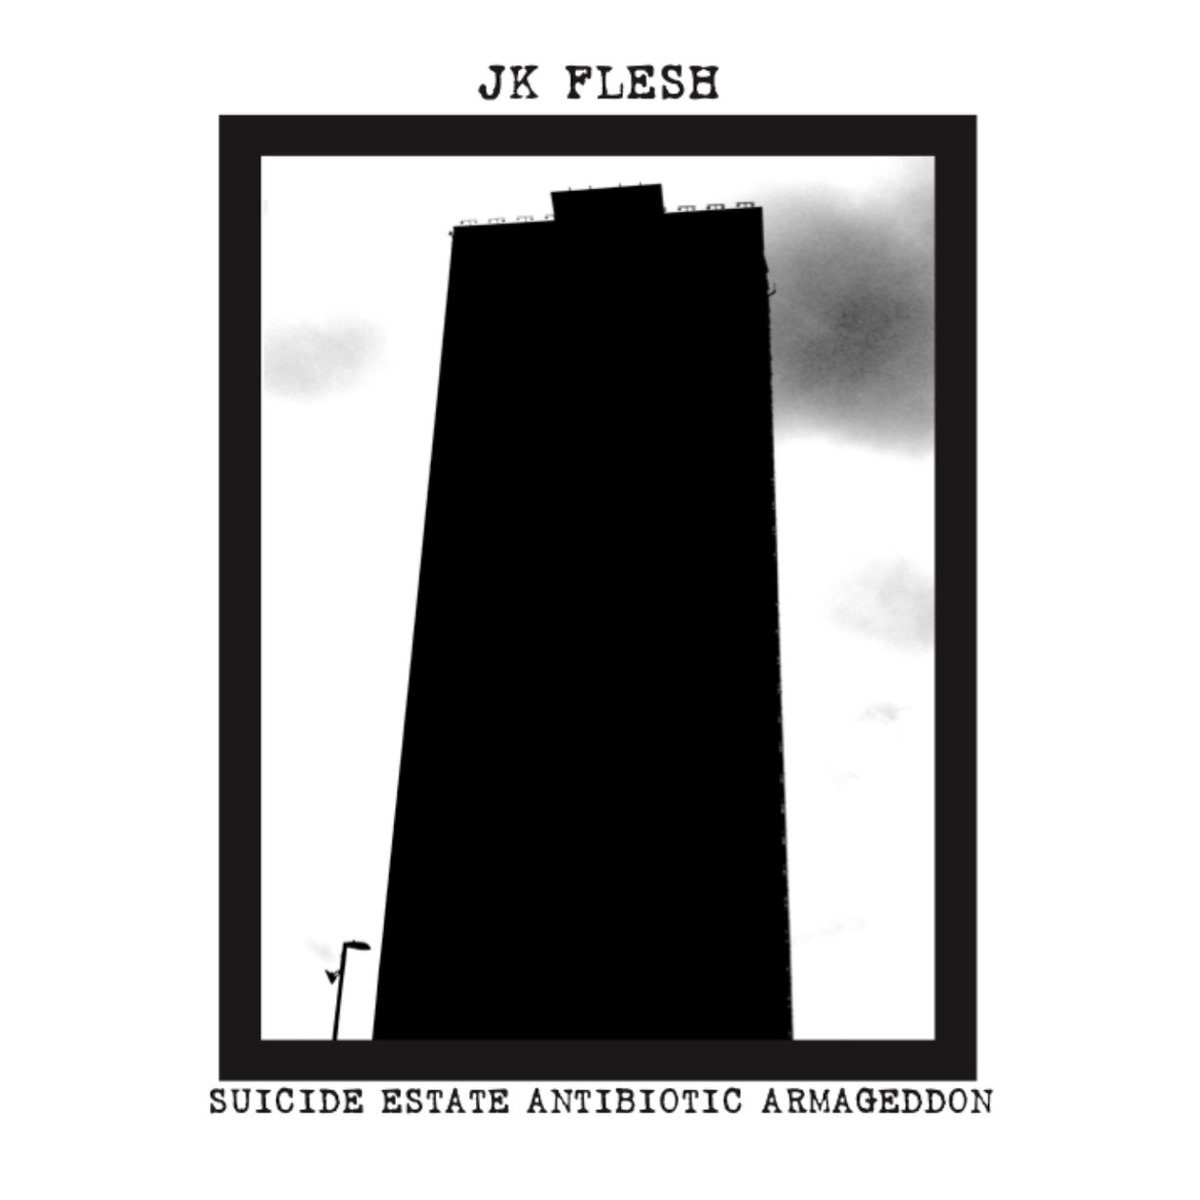 JK Flesh – Suicide Estate Antibiotic Armageddon